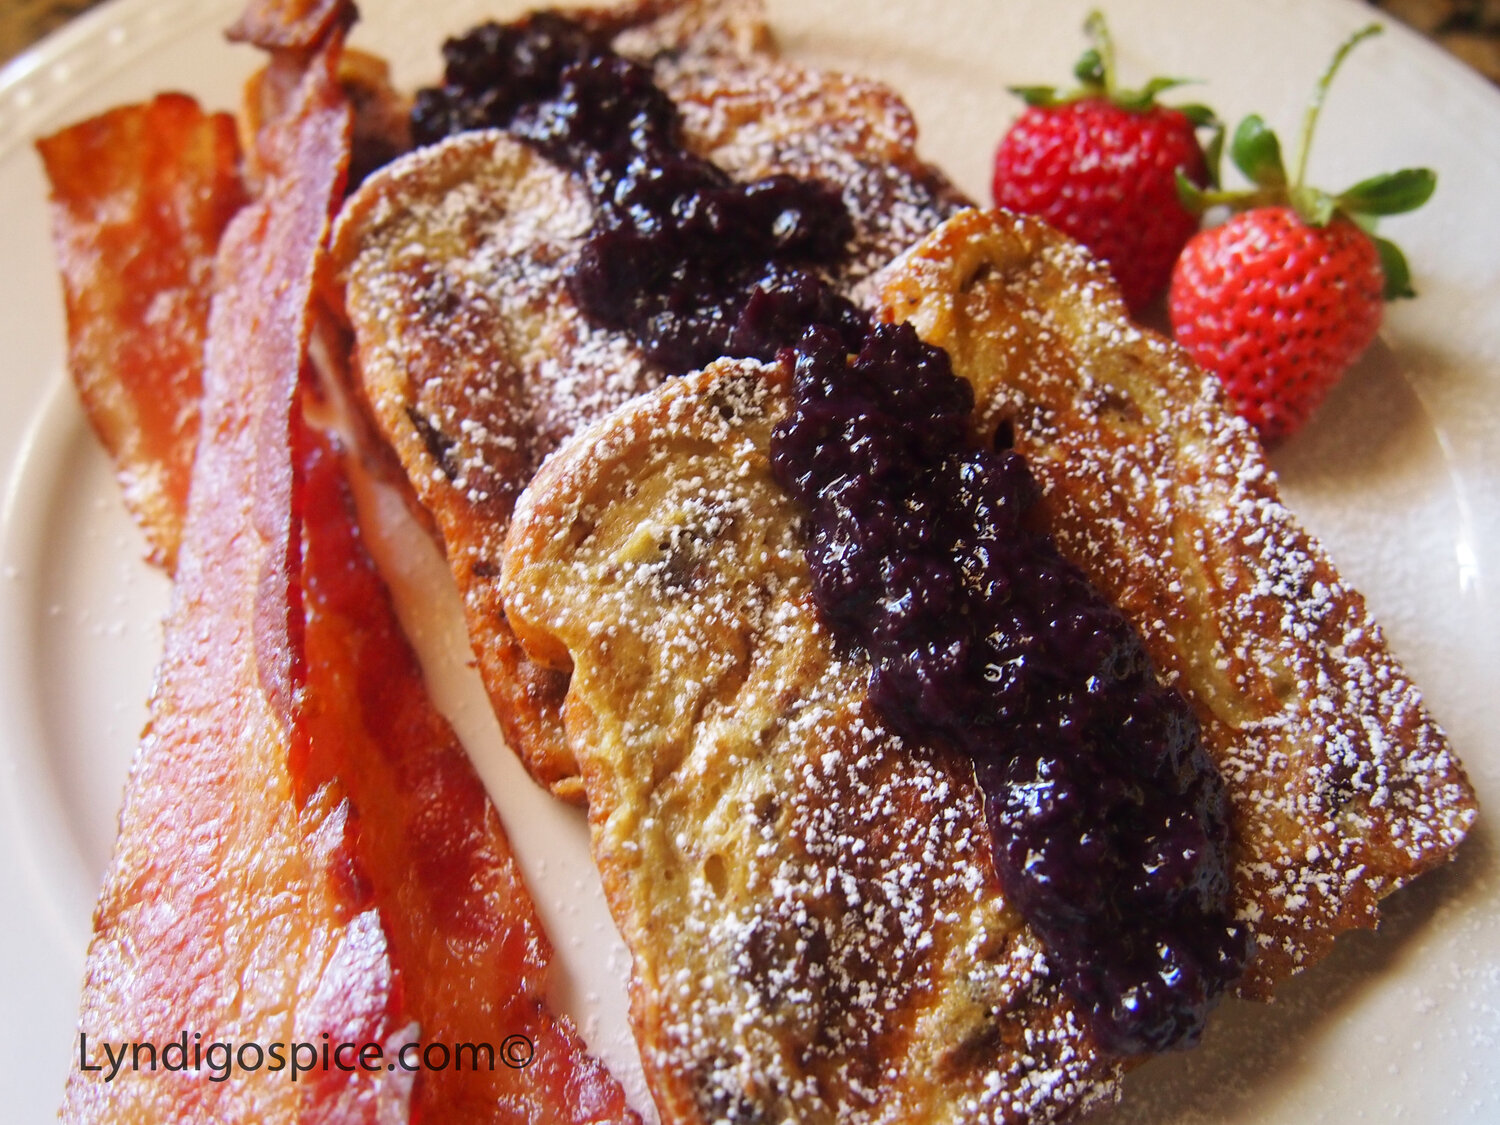 French toast with Lyndigo Spice® blueberry fruit spread